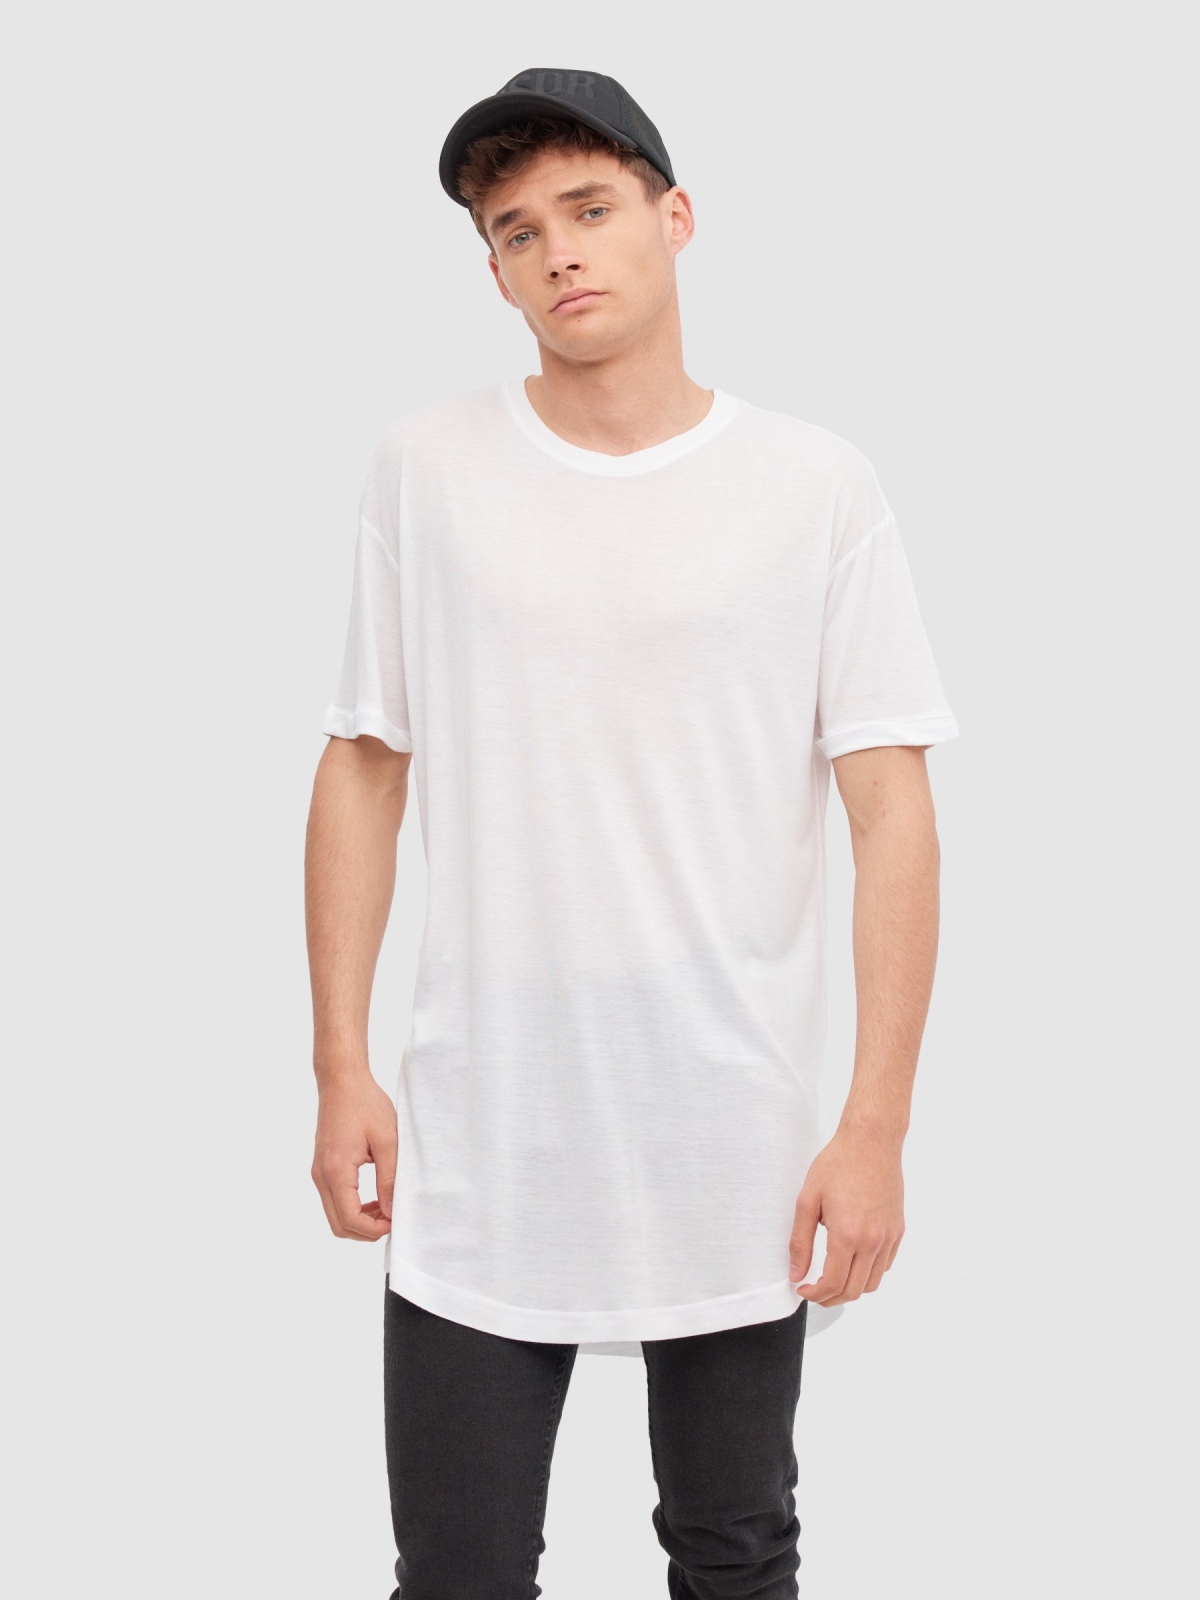 Camiseta larga básica blanco vista media frontal